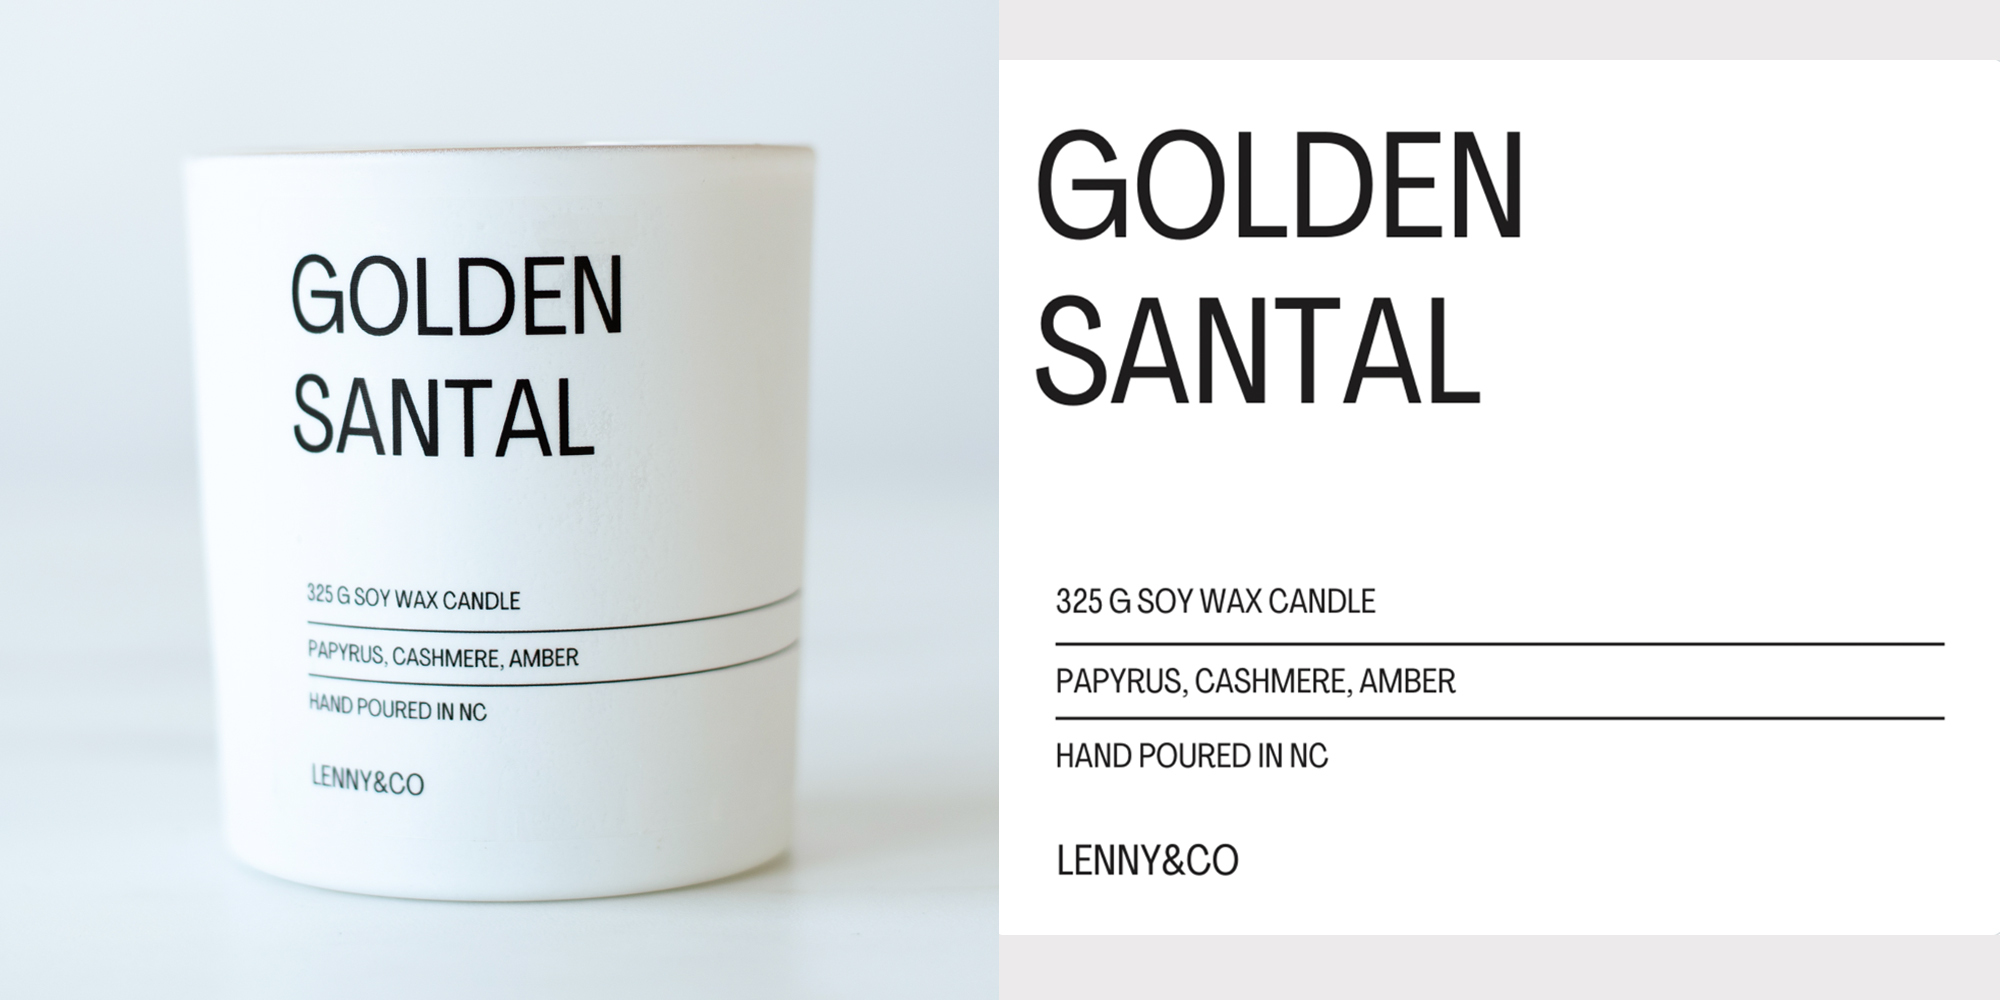 Golden Santal fragrance oil candle and label.